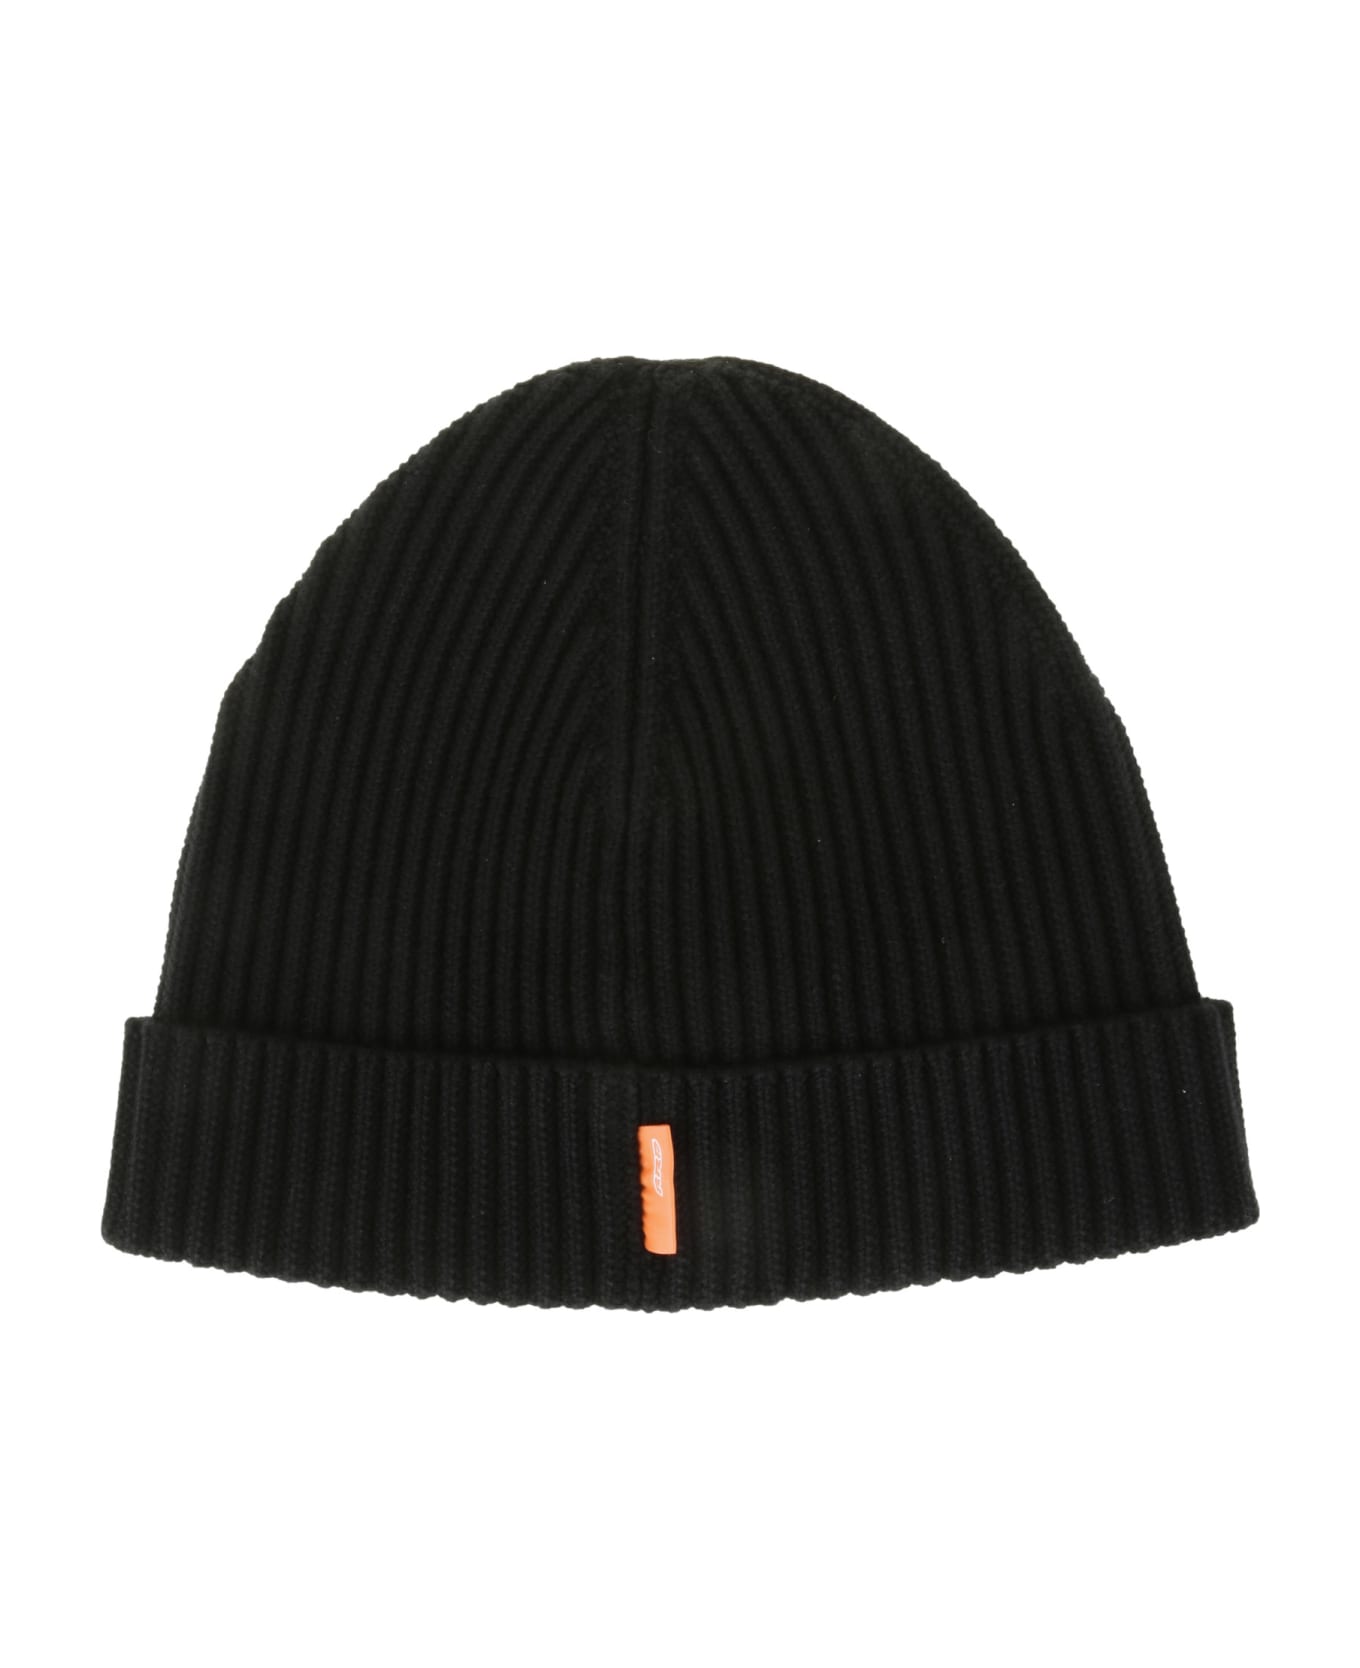 RRD - Roberto Ricci Design Cap Cotton Rib - Black 帽子